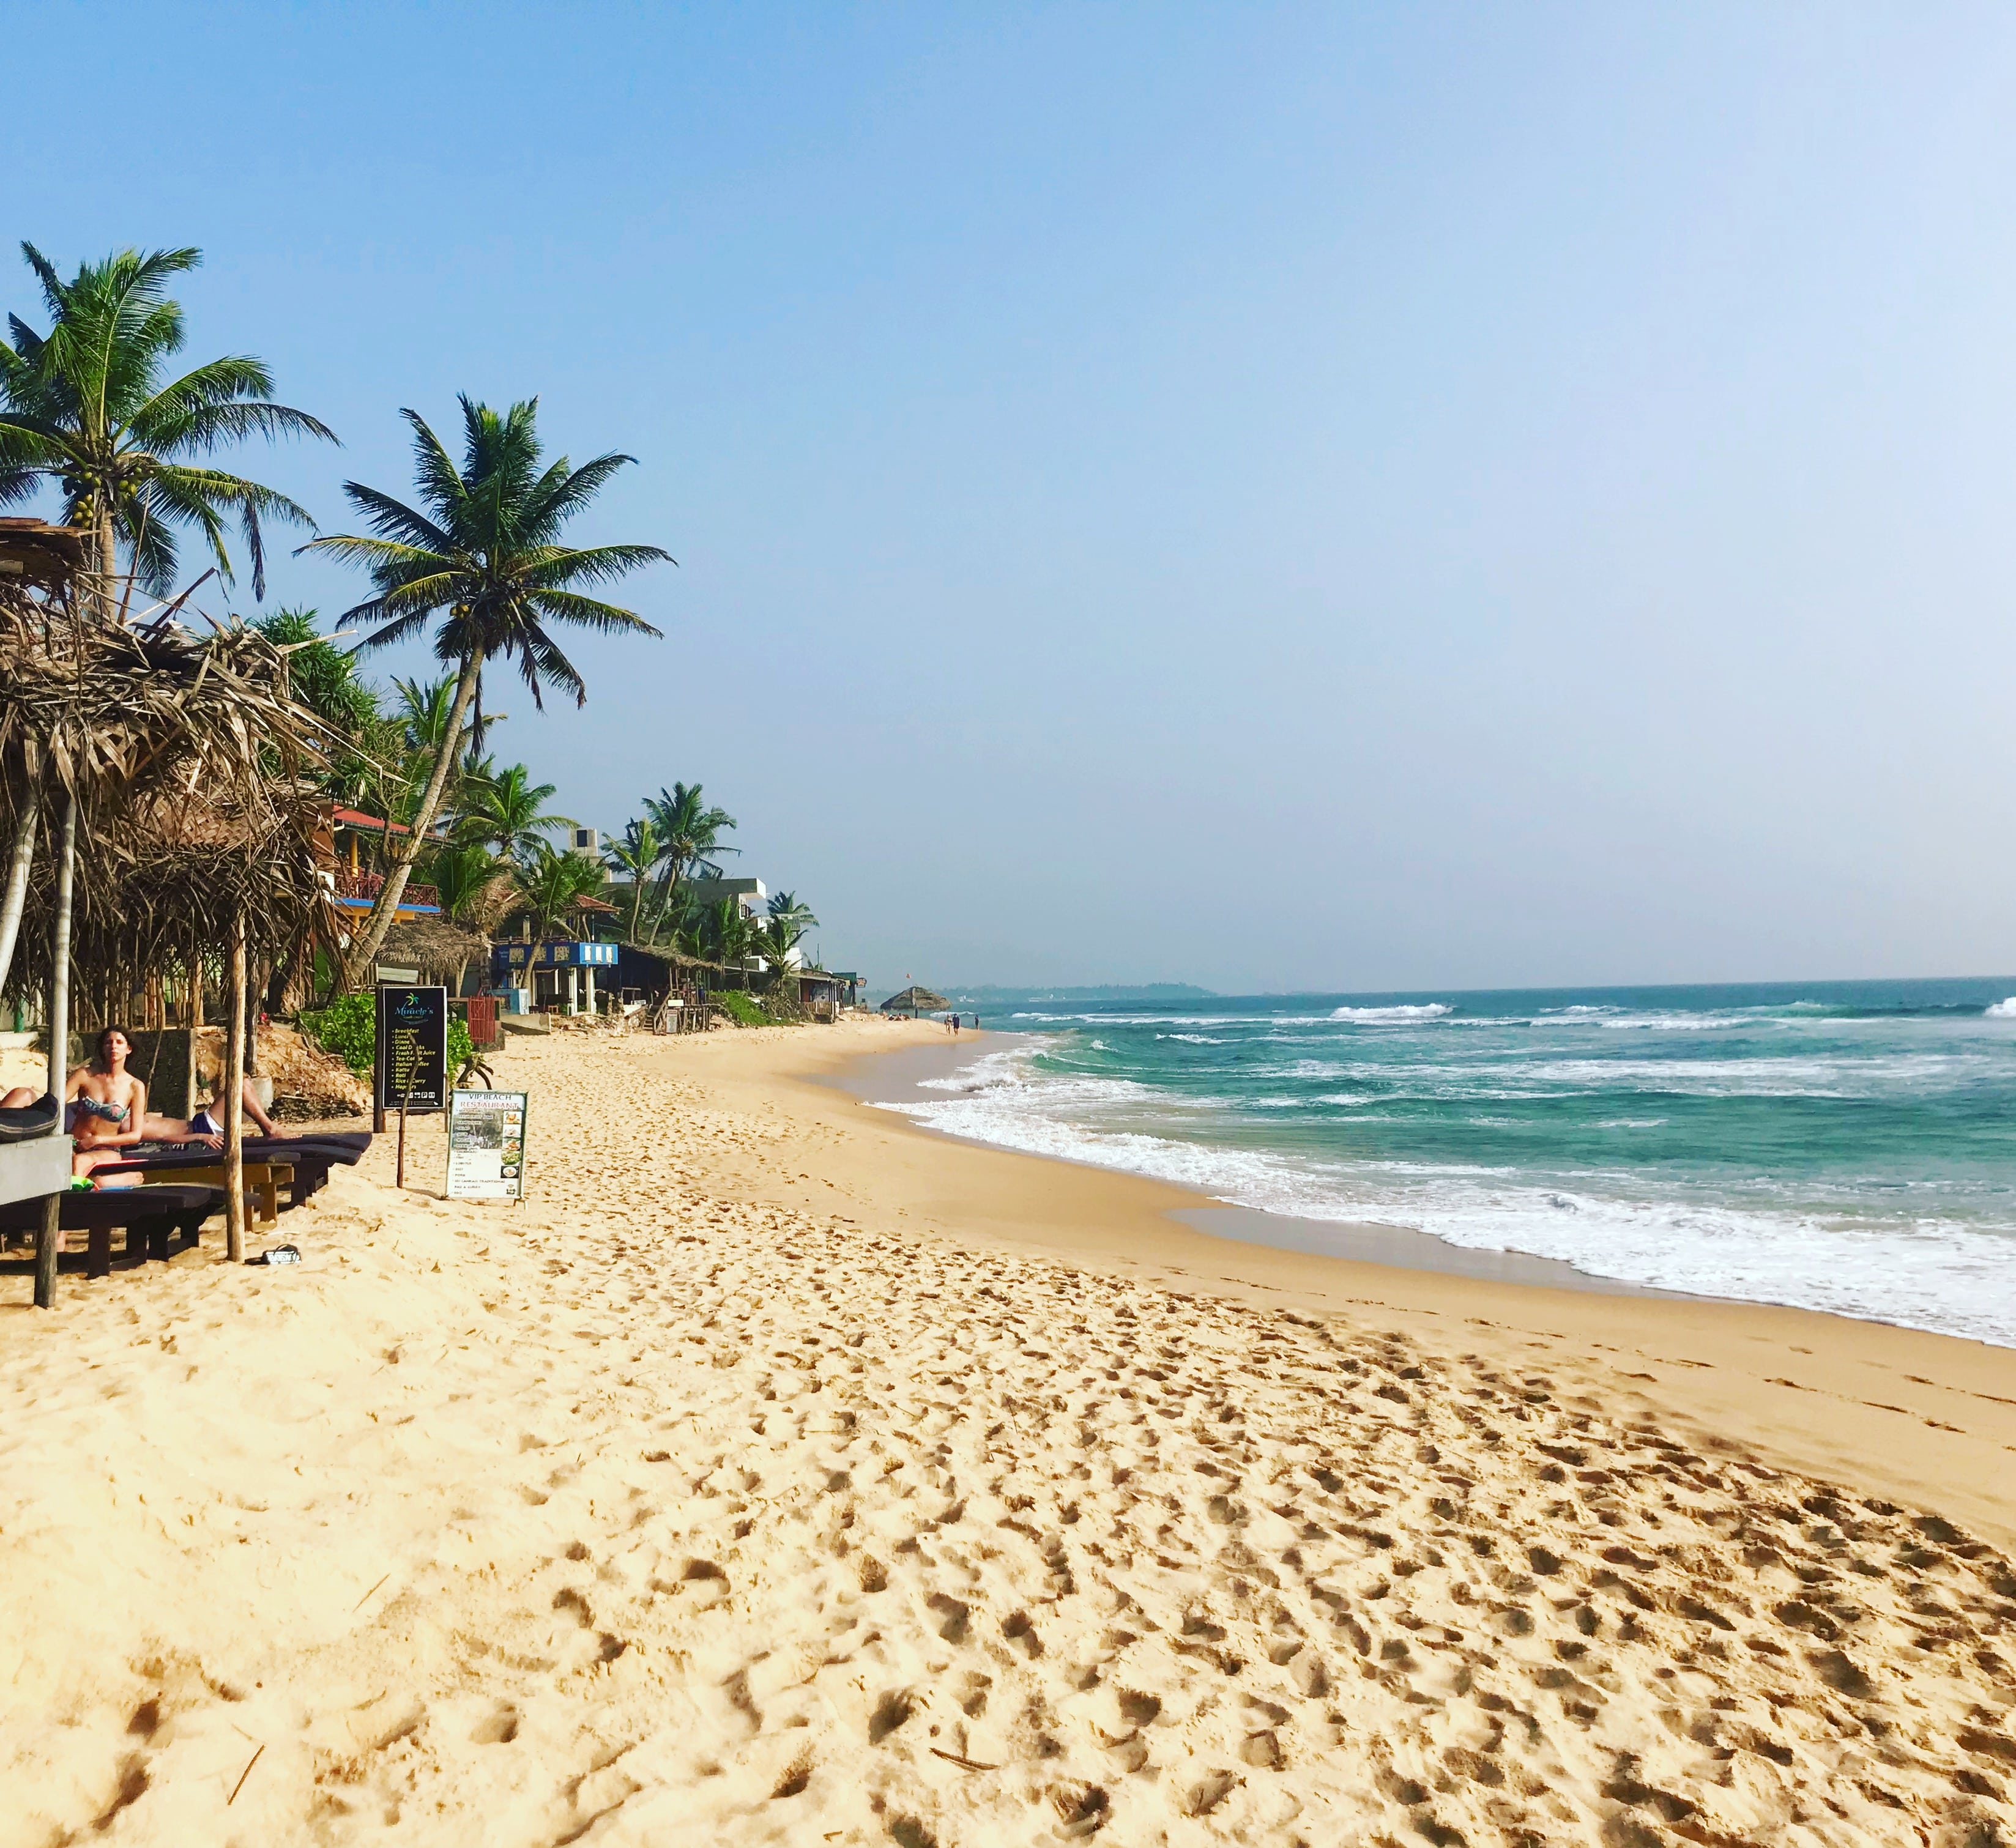 Discover the beautiful beaches of Sri Lanka